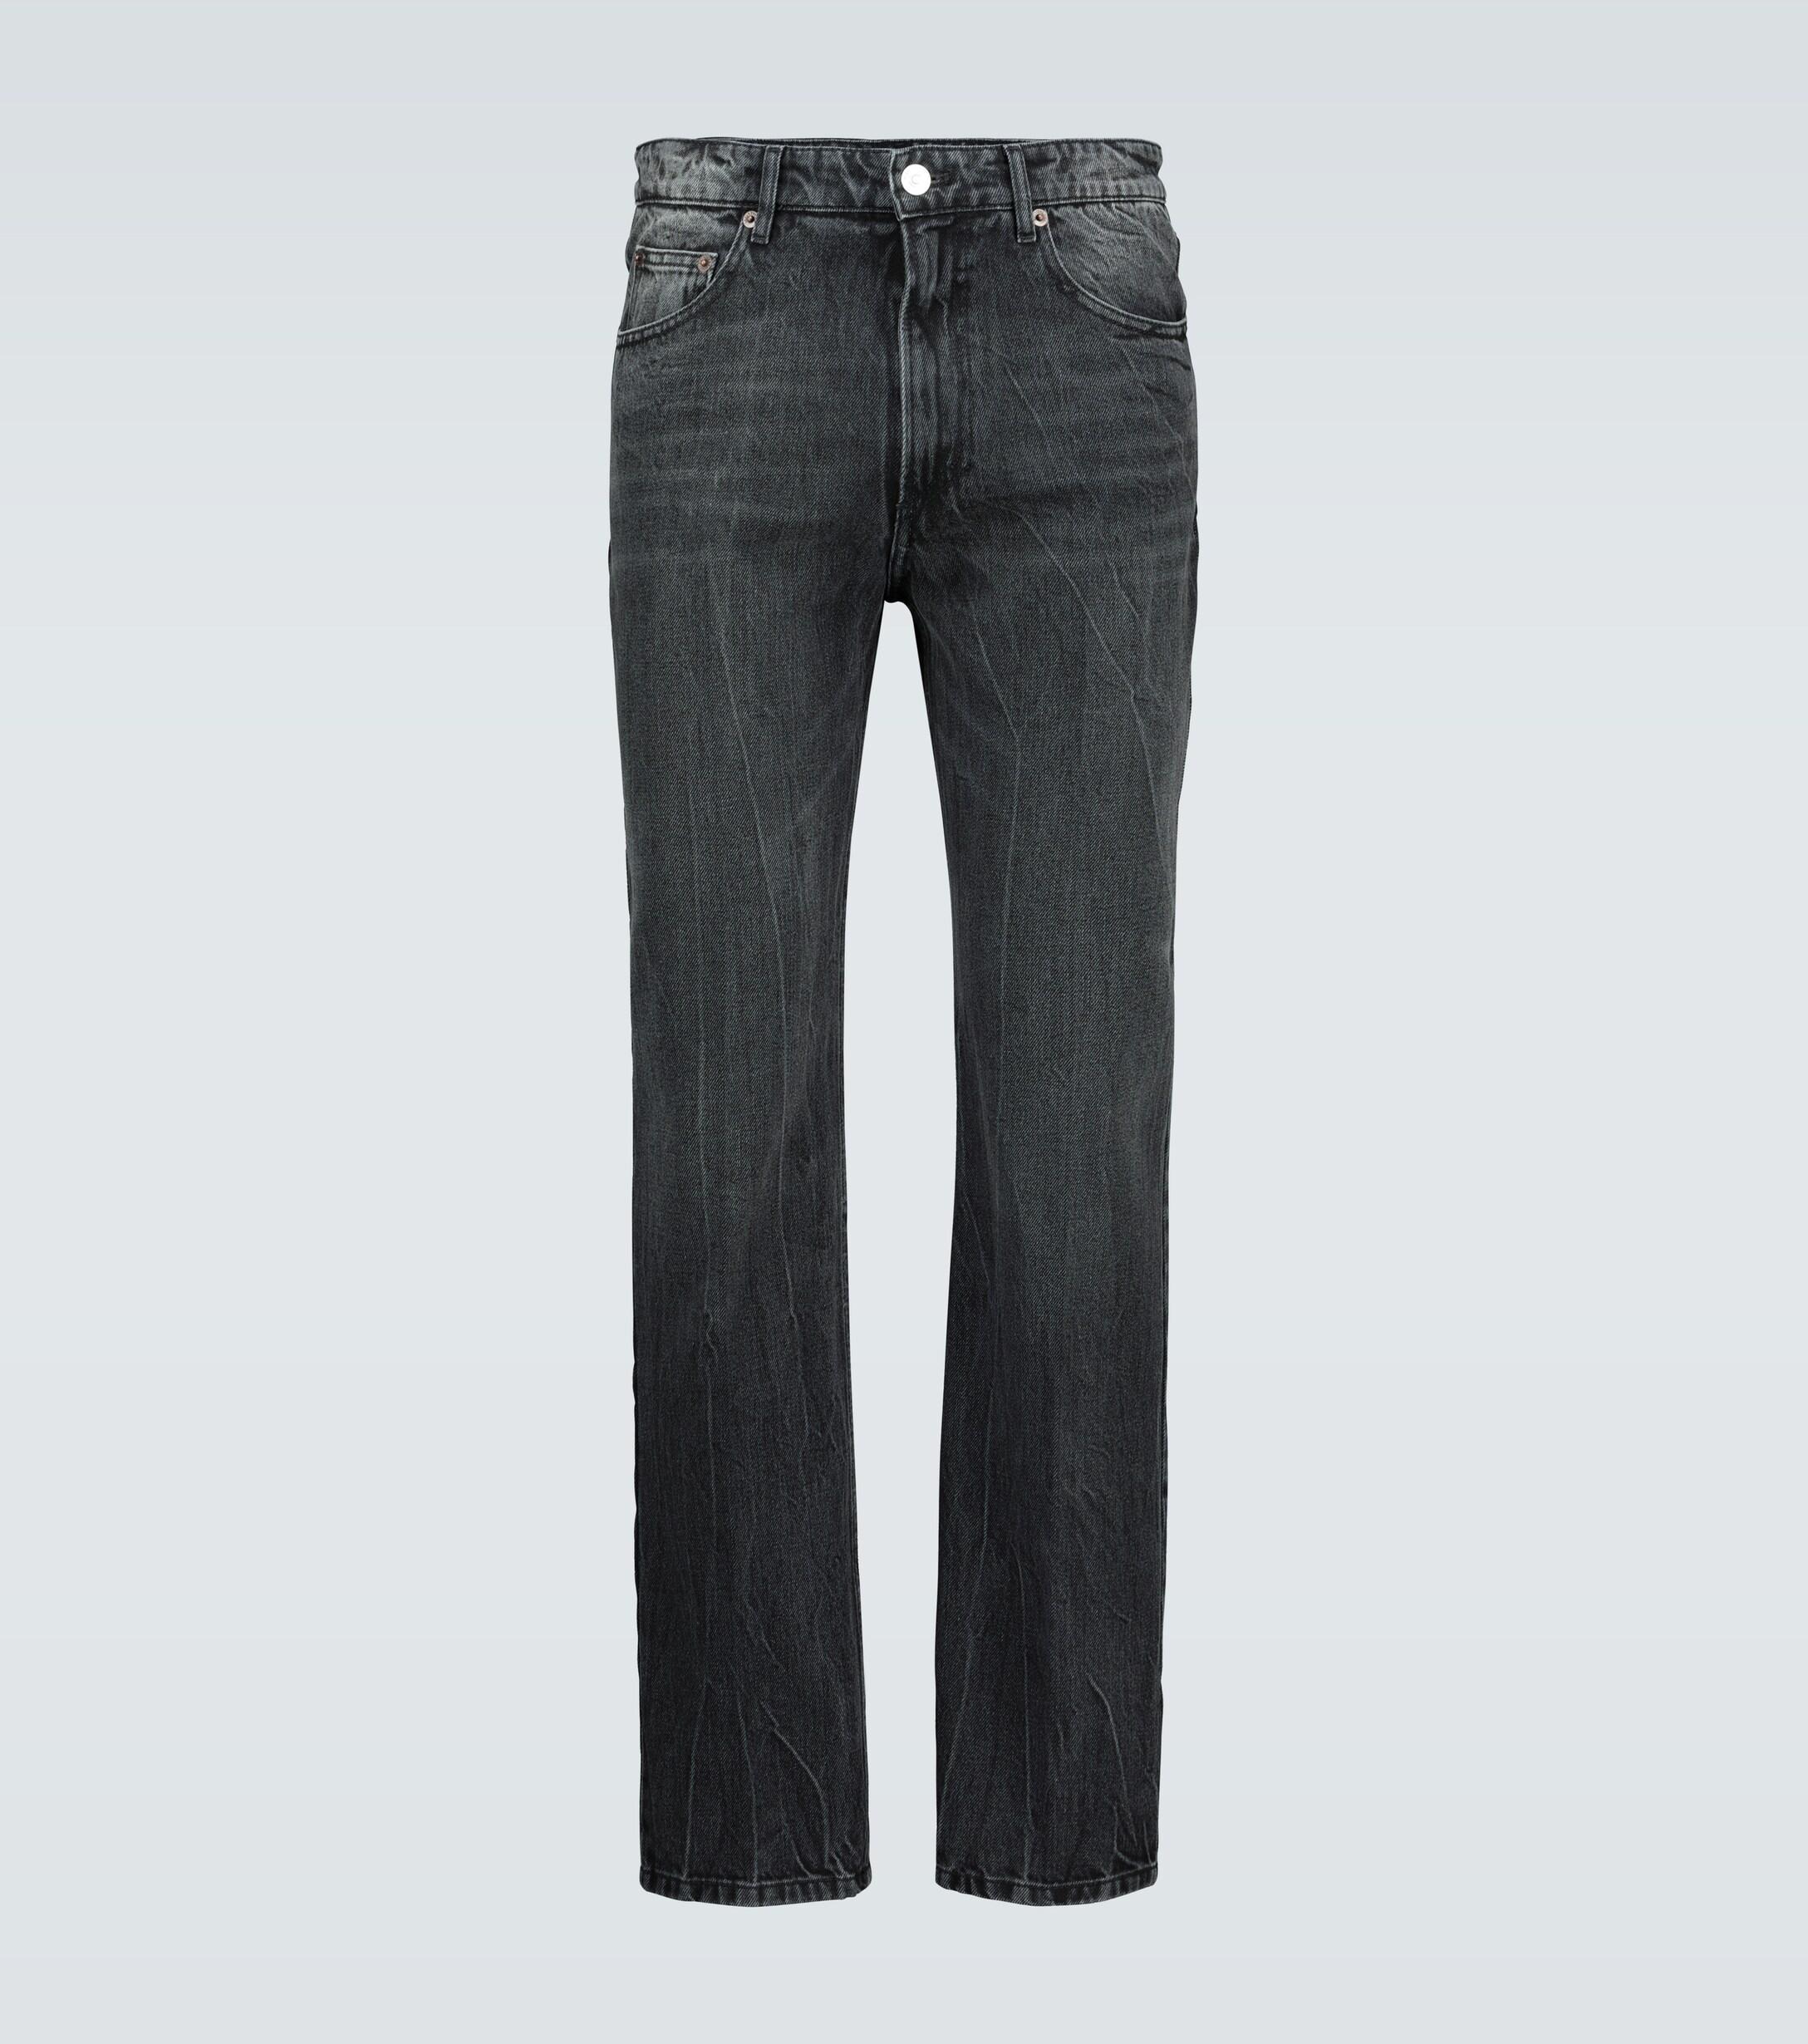 Balenciaga Denim Slim-fit Jeans in Black for Men - Lyst